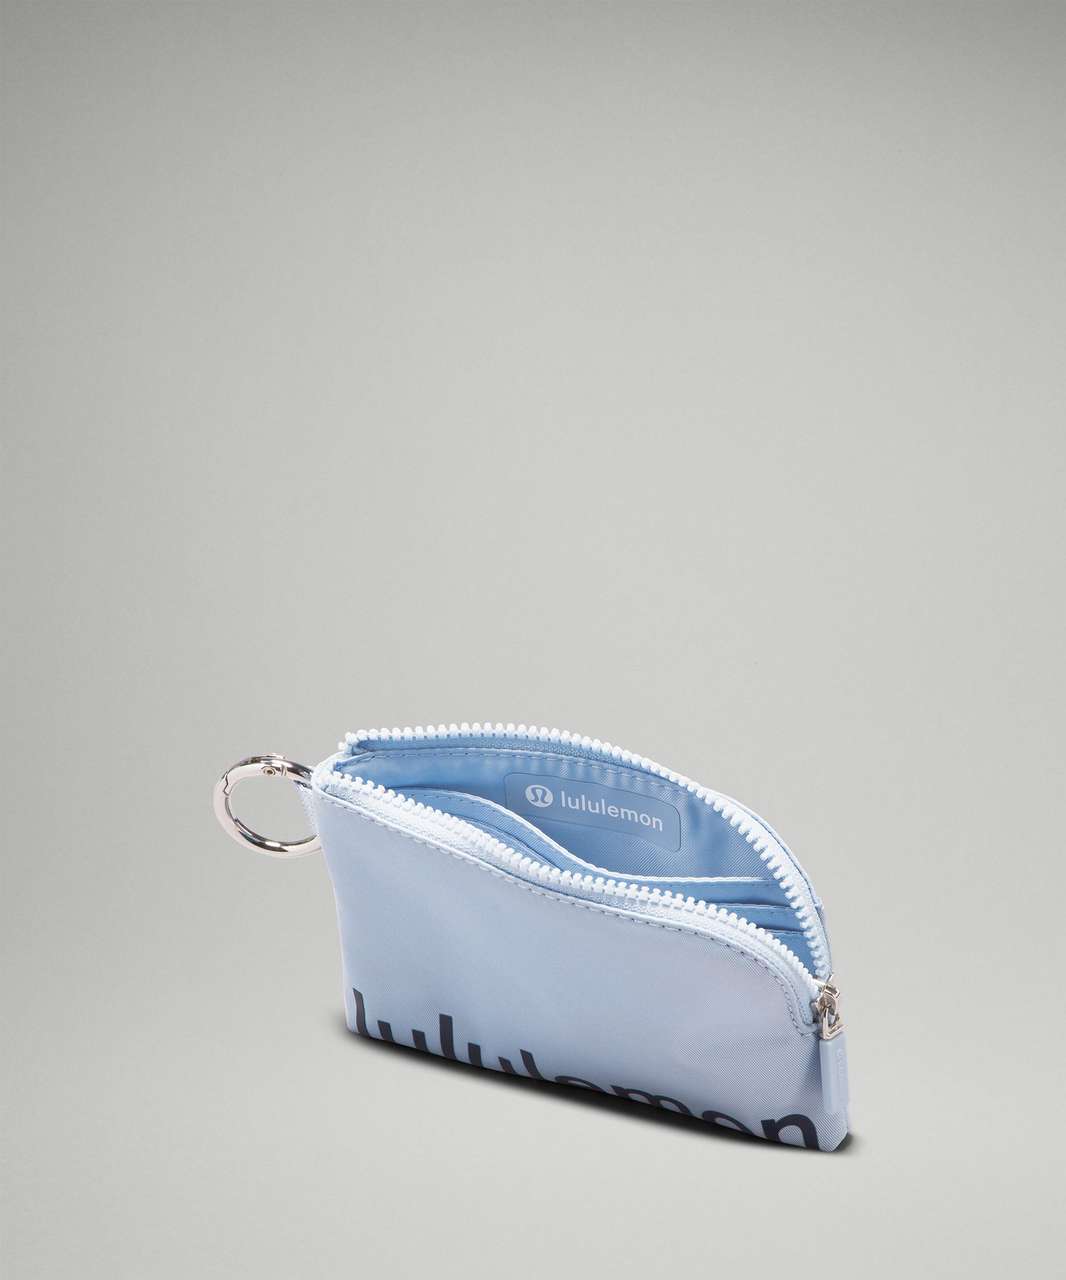 Lululemon Clippable Card Pouch - Blue Linen / True Navy